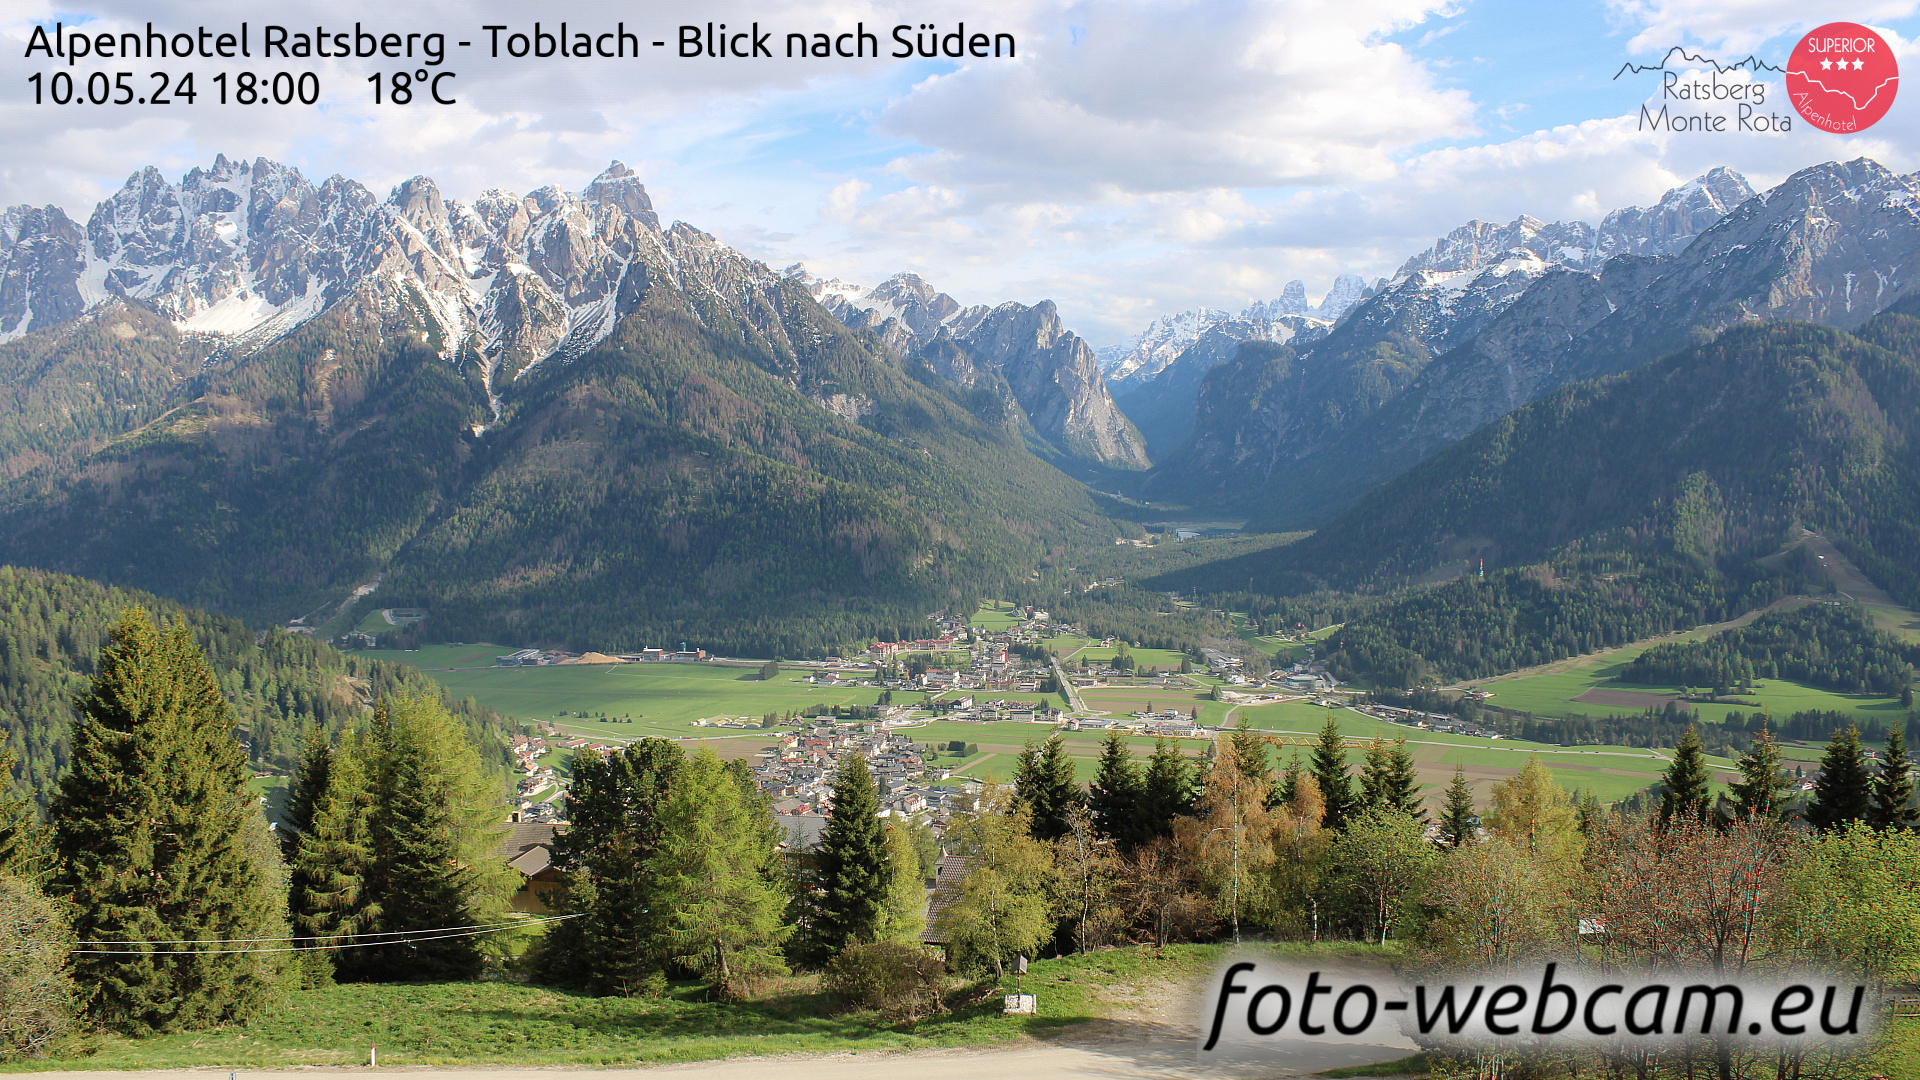 Toblach (Dolomites) Thu. 18:03